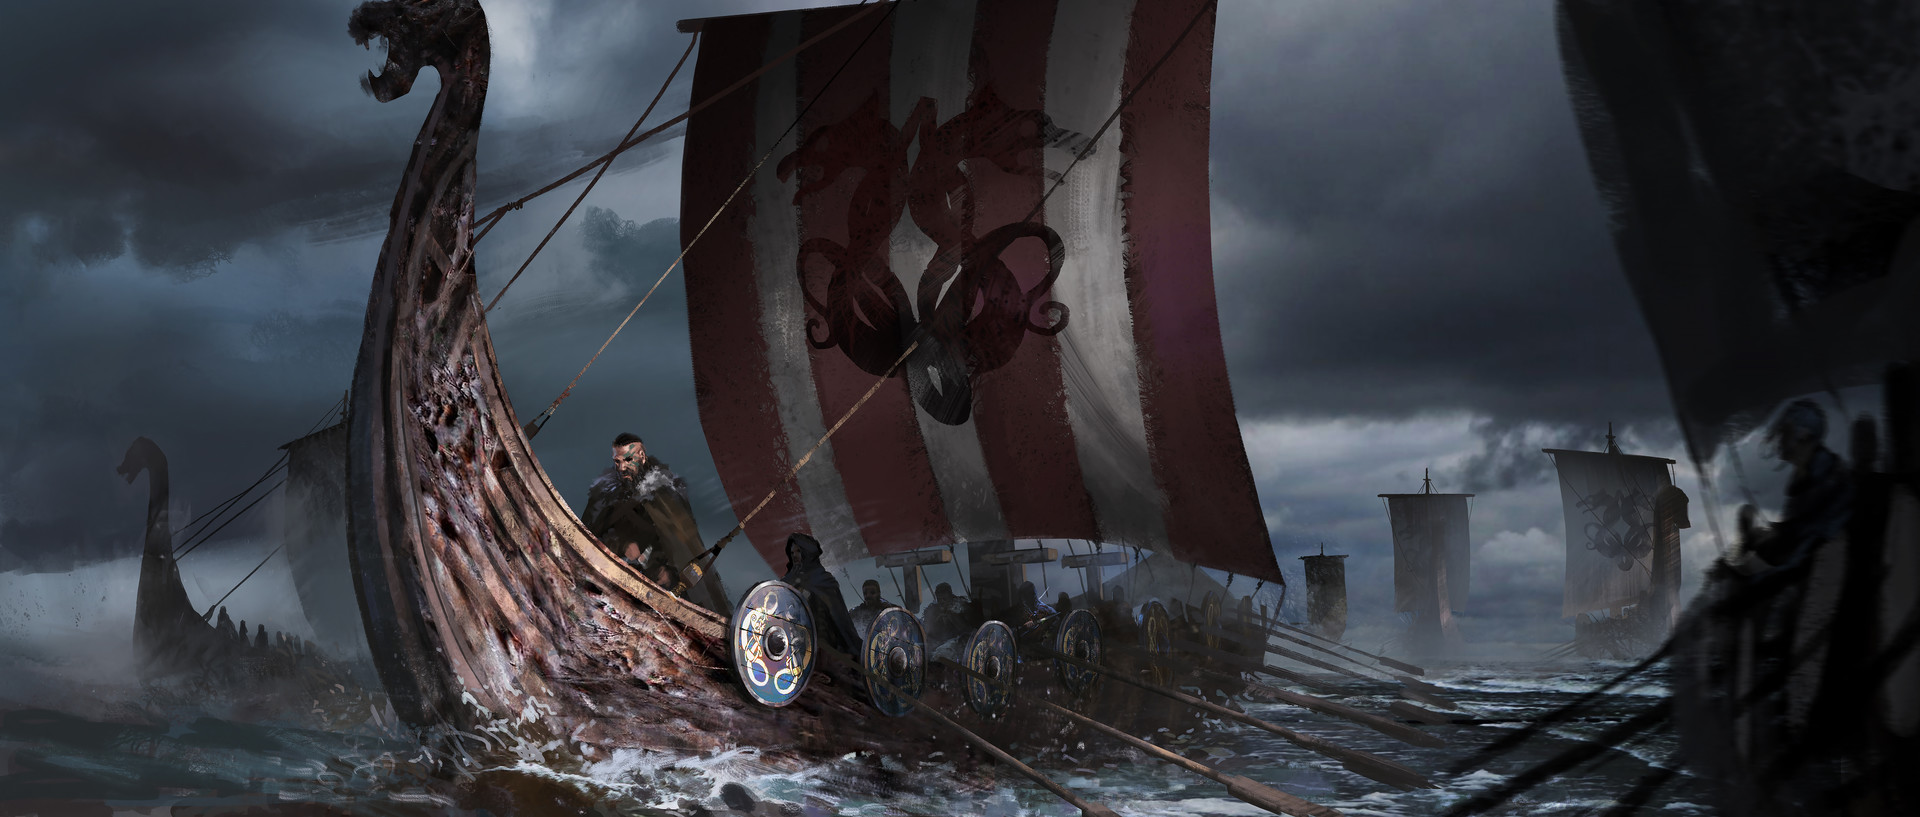 Shield Warrior Viking Fantasy Art Wallpapers